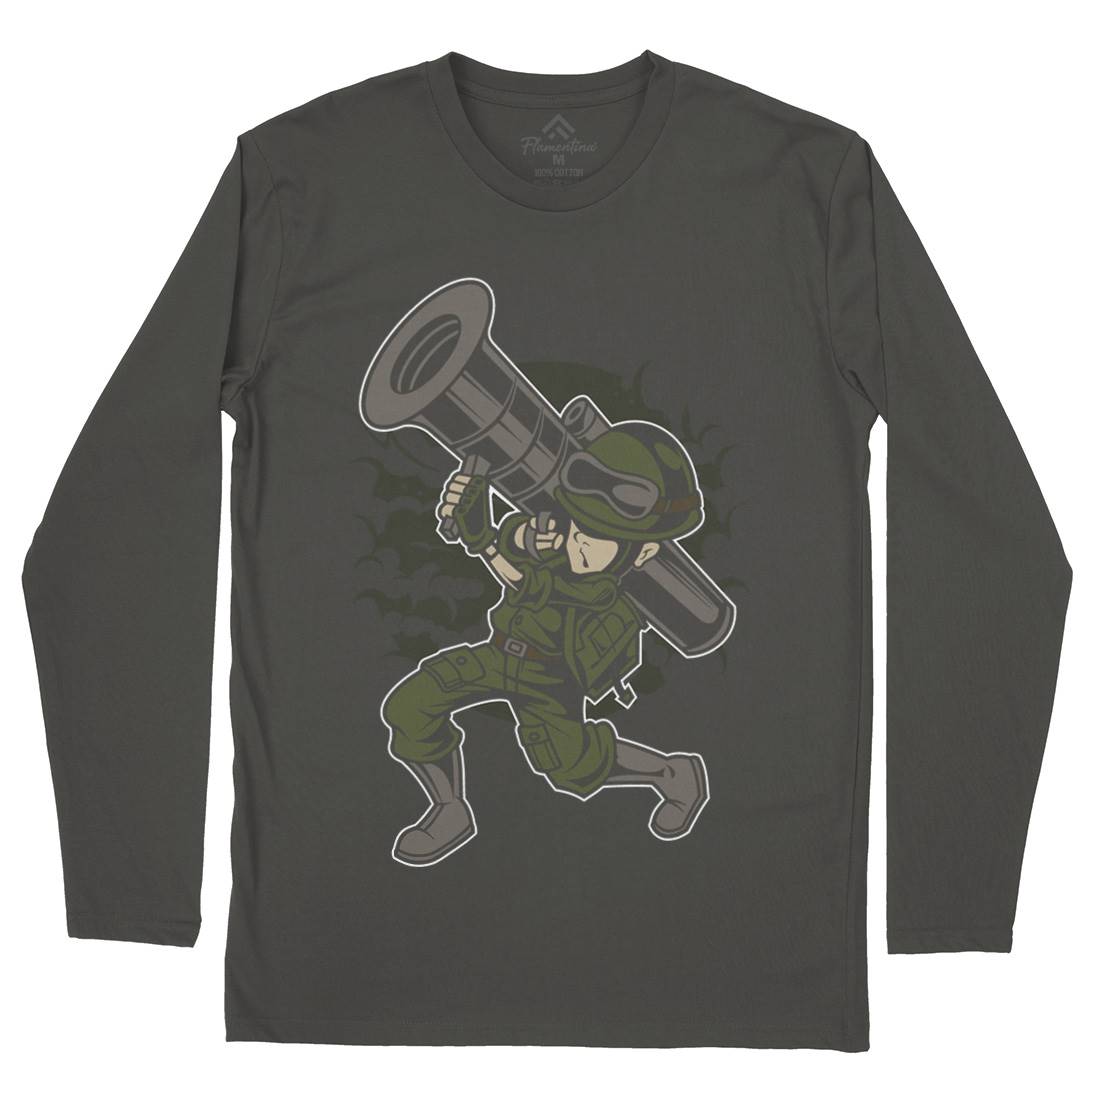 Rocket Launcher Mens Long Sleeve T-Shirt Army C427